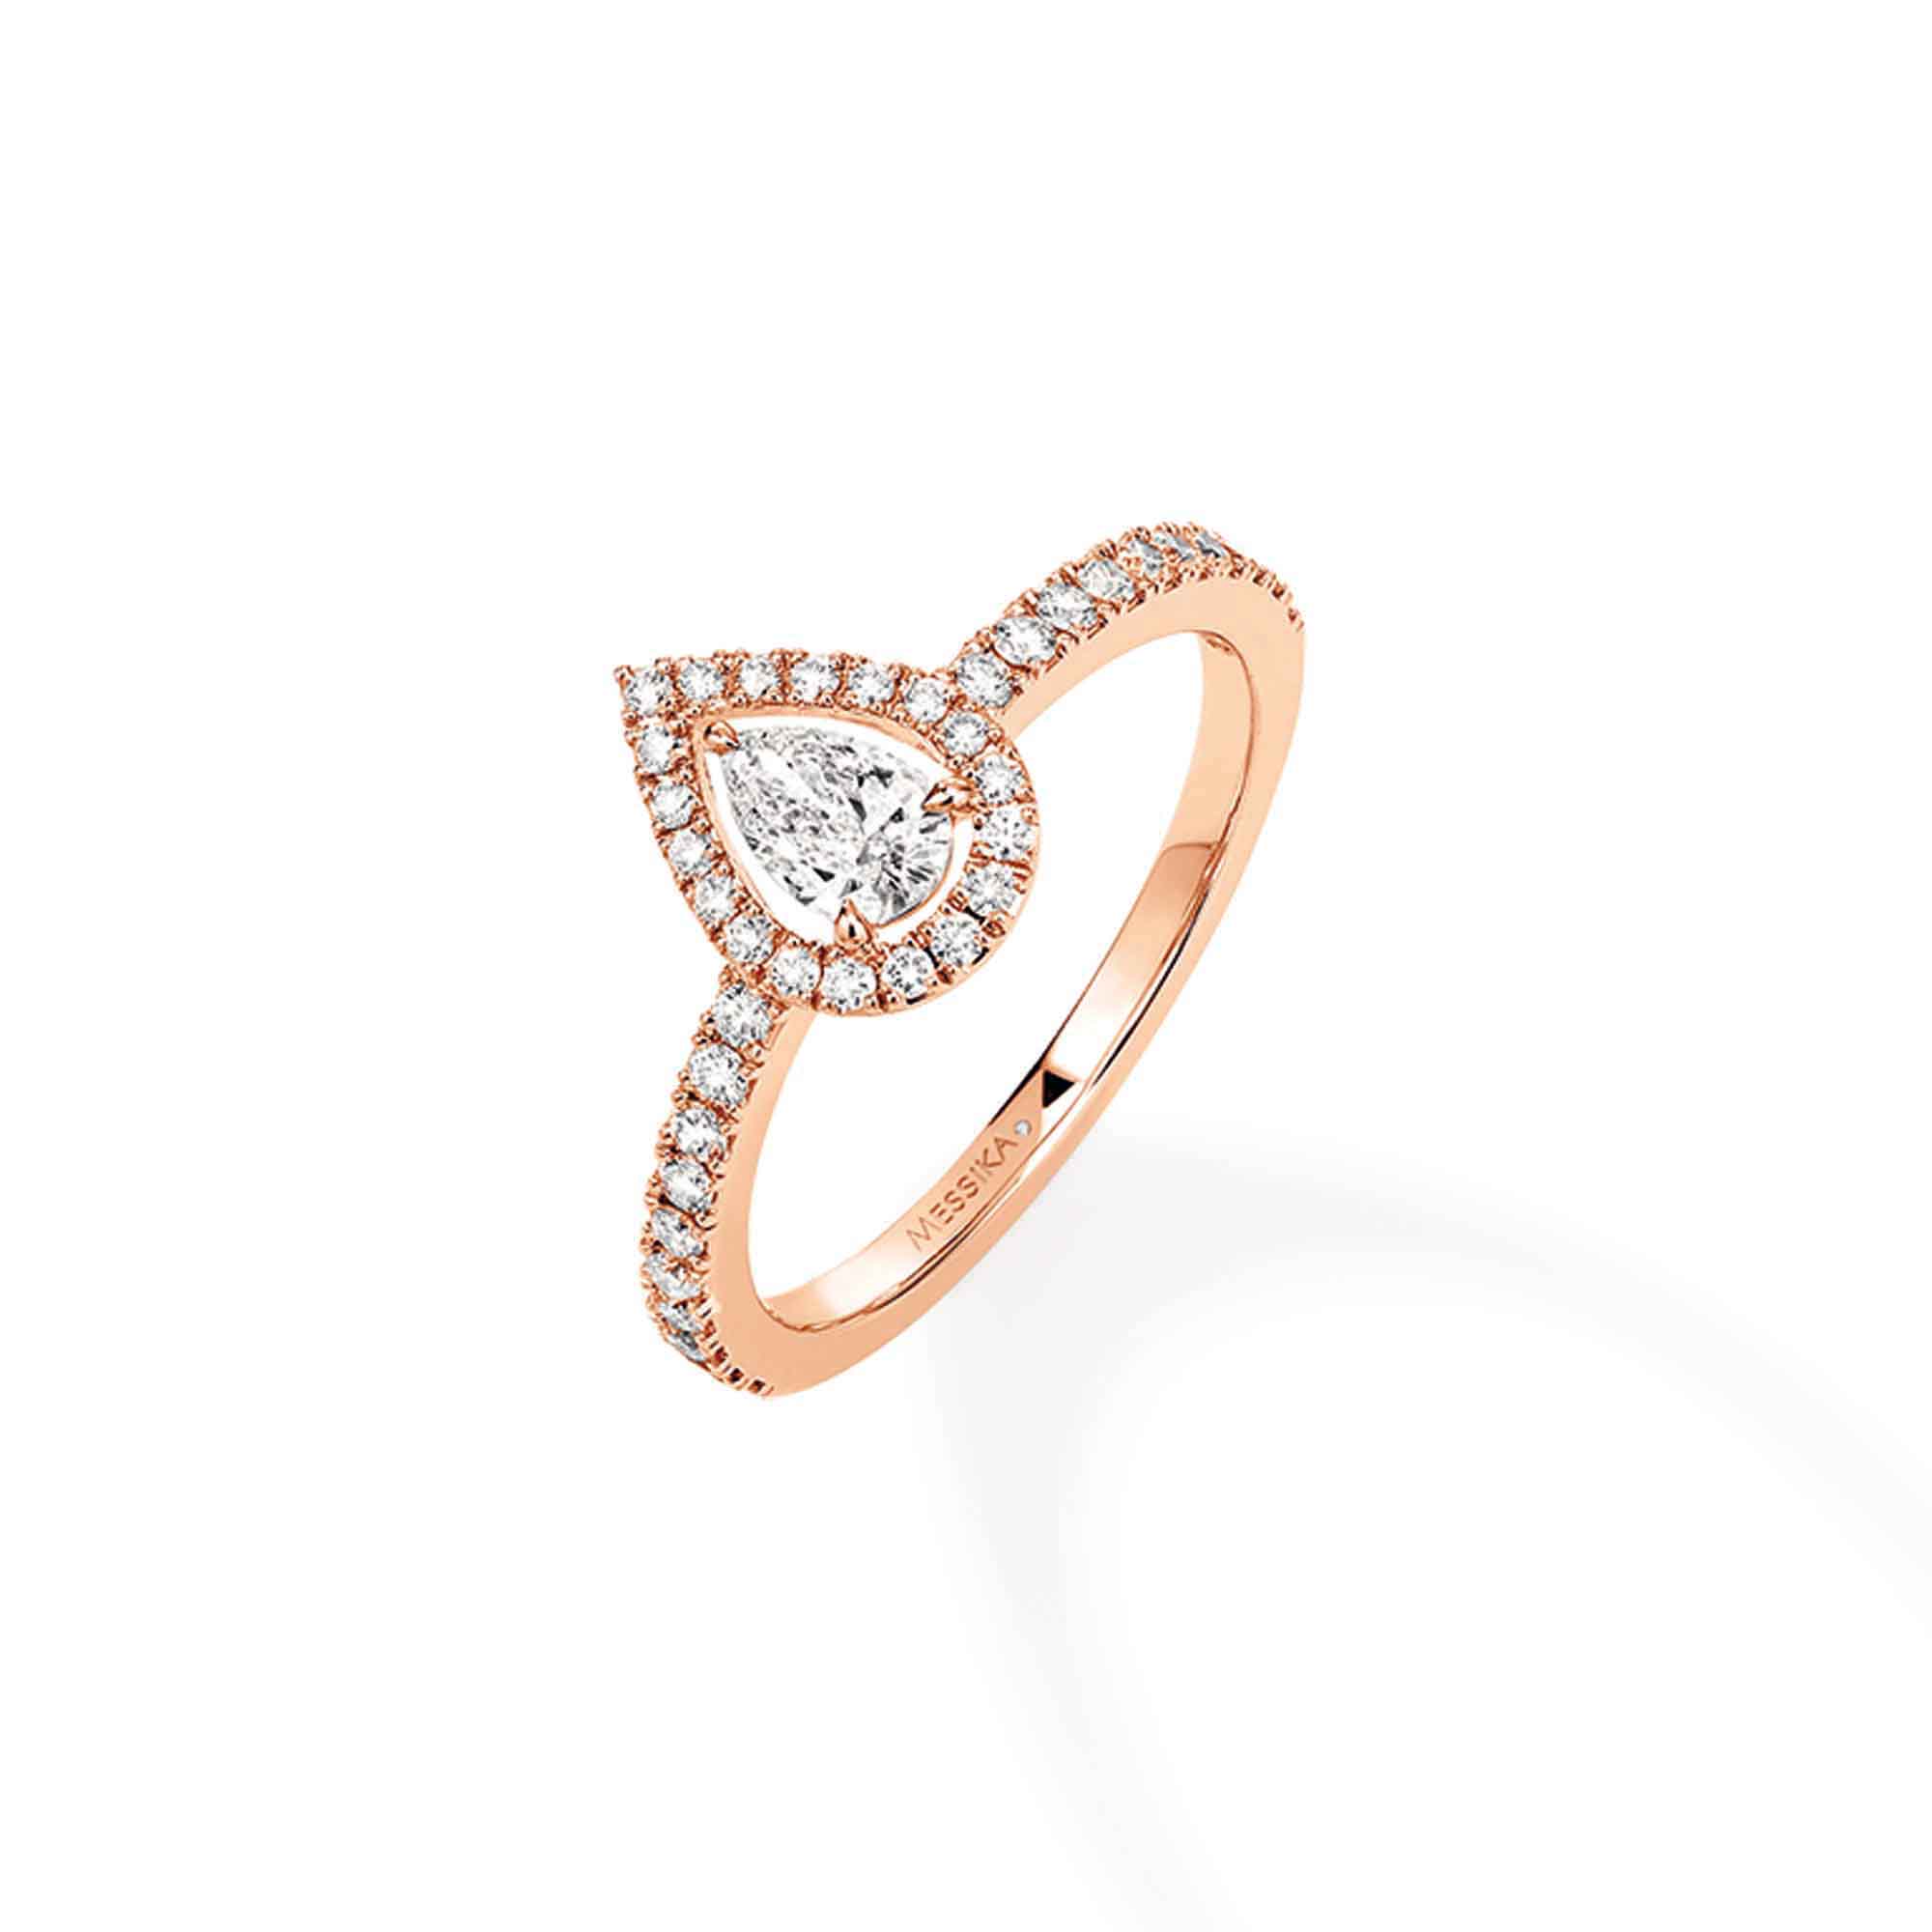 Messika Joy Diamant Poire Ring (Ref: 05220-PG)